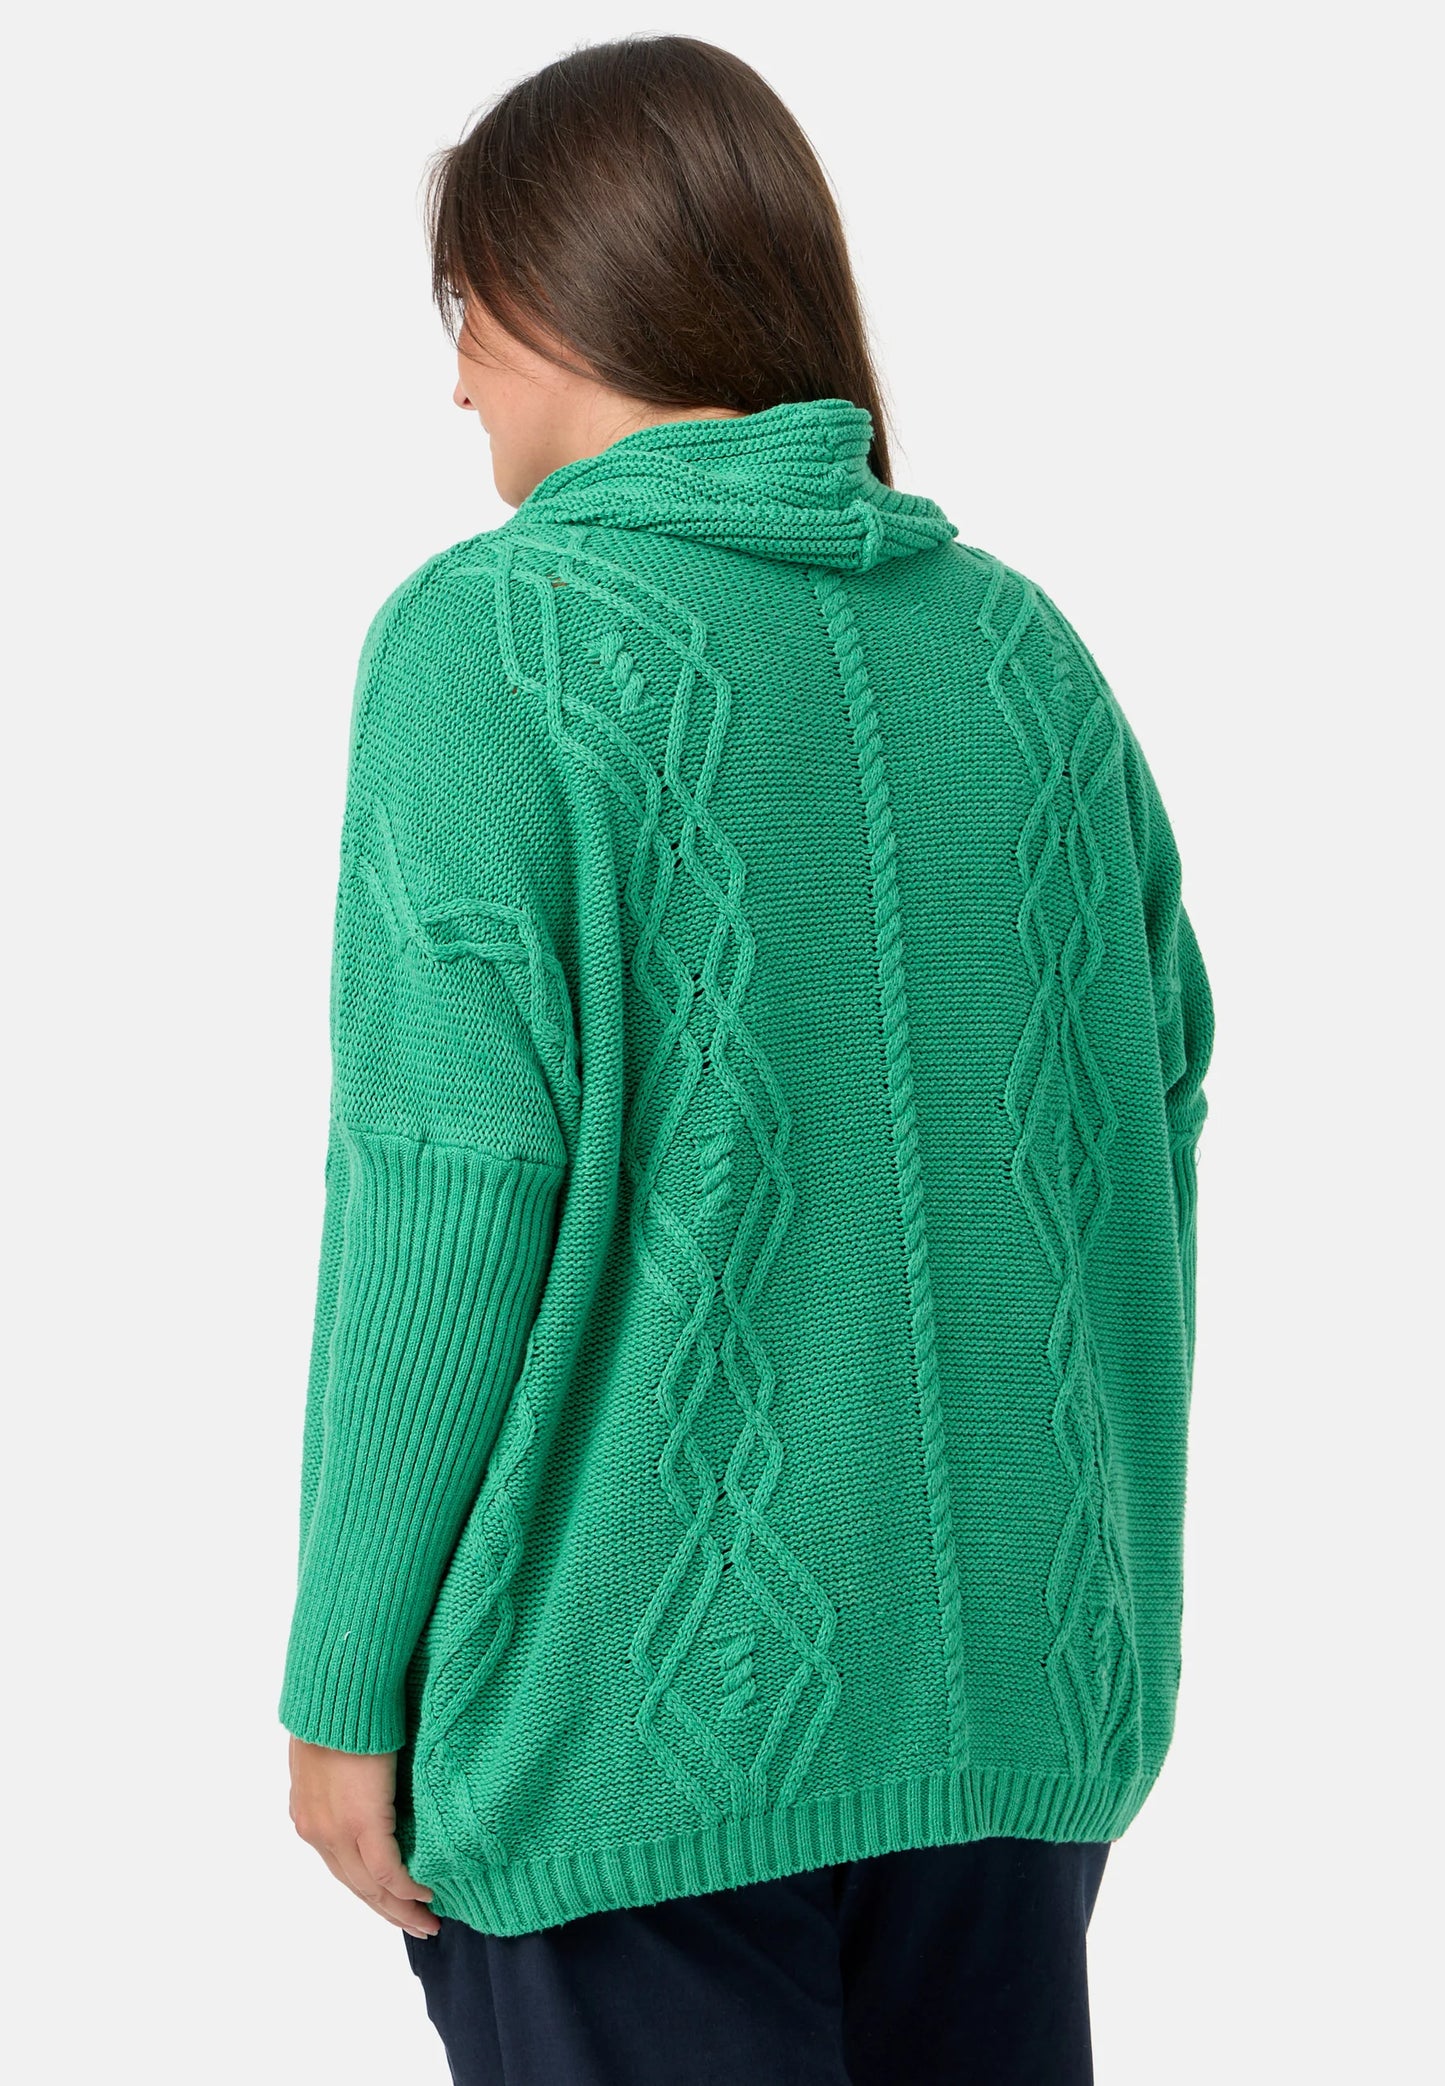 Knit poncho sweater